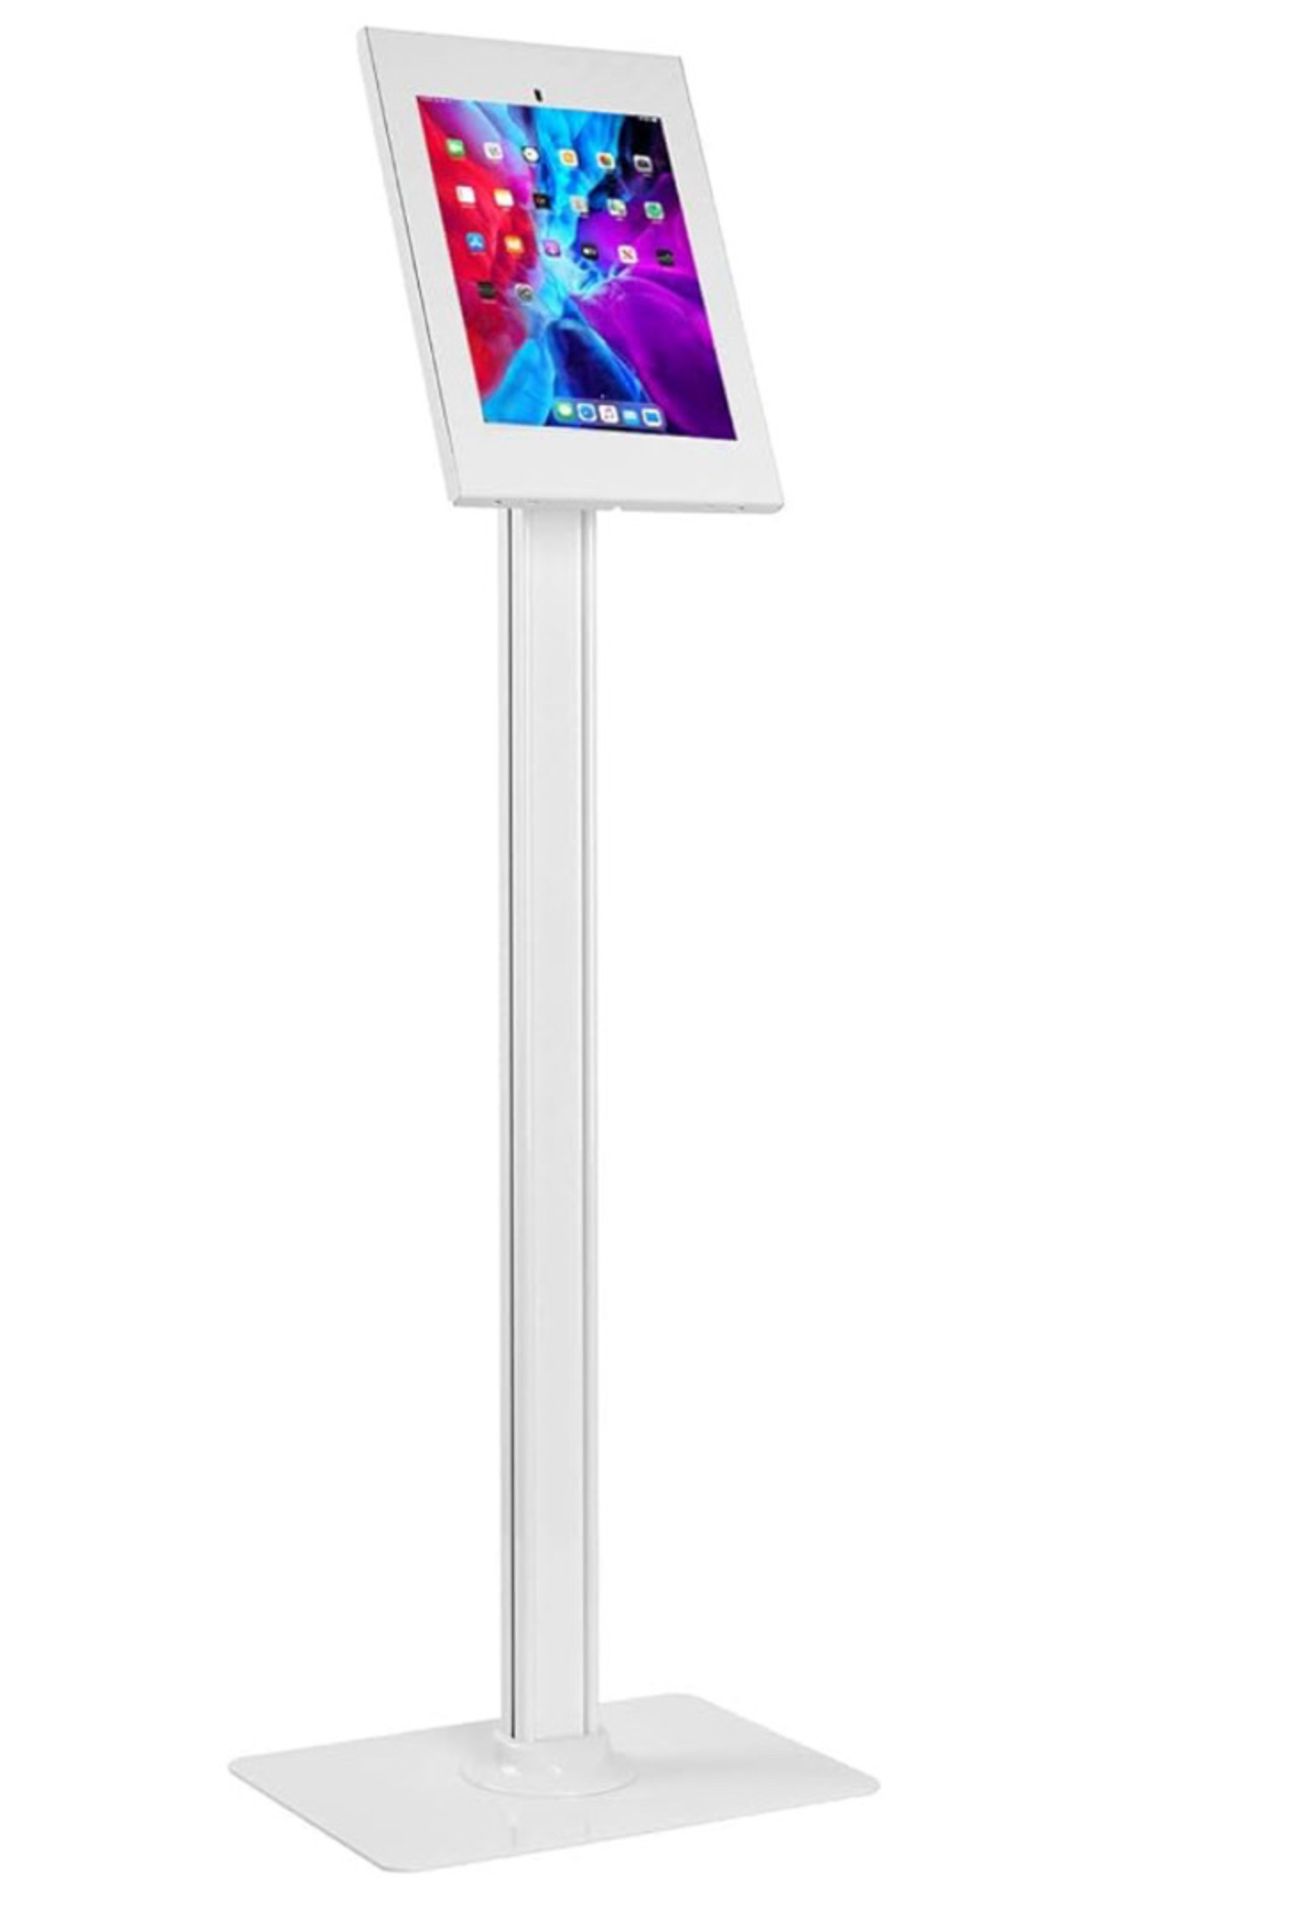 3 x  Allcam IPP2604FL Anti-Theft Floor Stand w/ Base for iPad Pro - NEW - AMAZON PRICE Â£209.94!